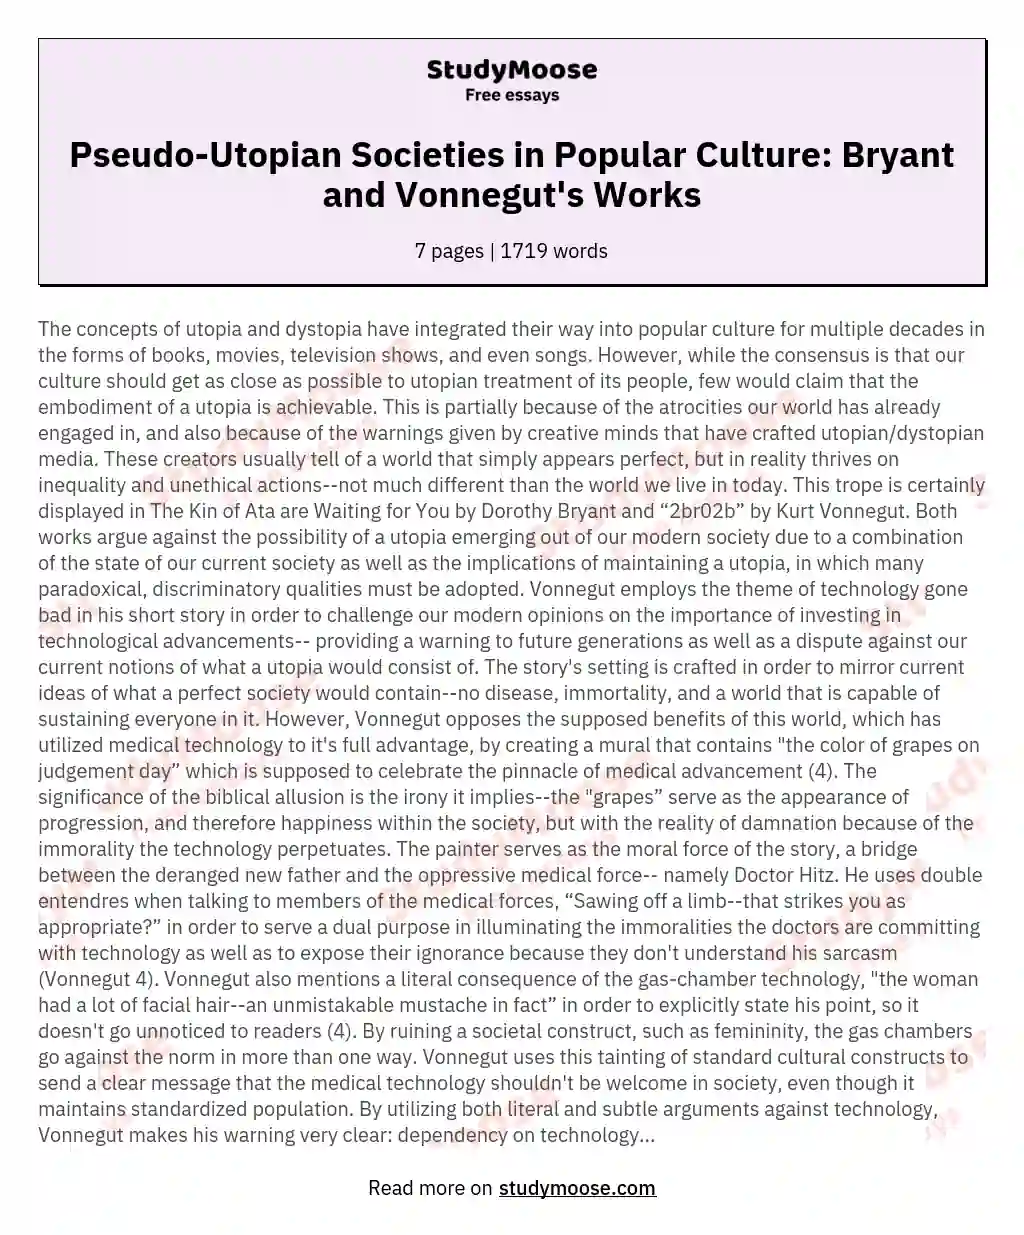 Pseudo-Utopian Societies in Popular Culture: Bryant and Vonnegut's Works essay